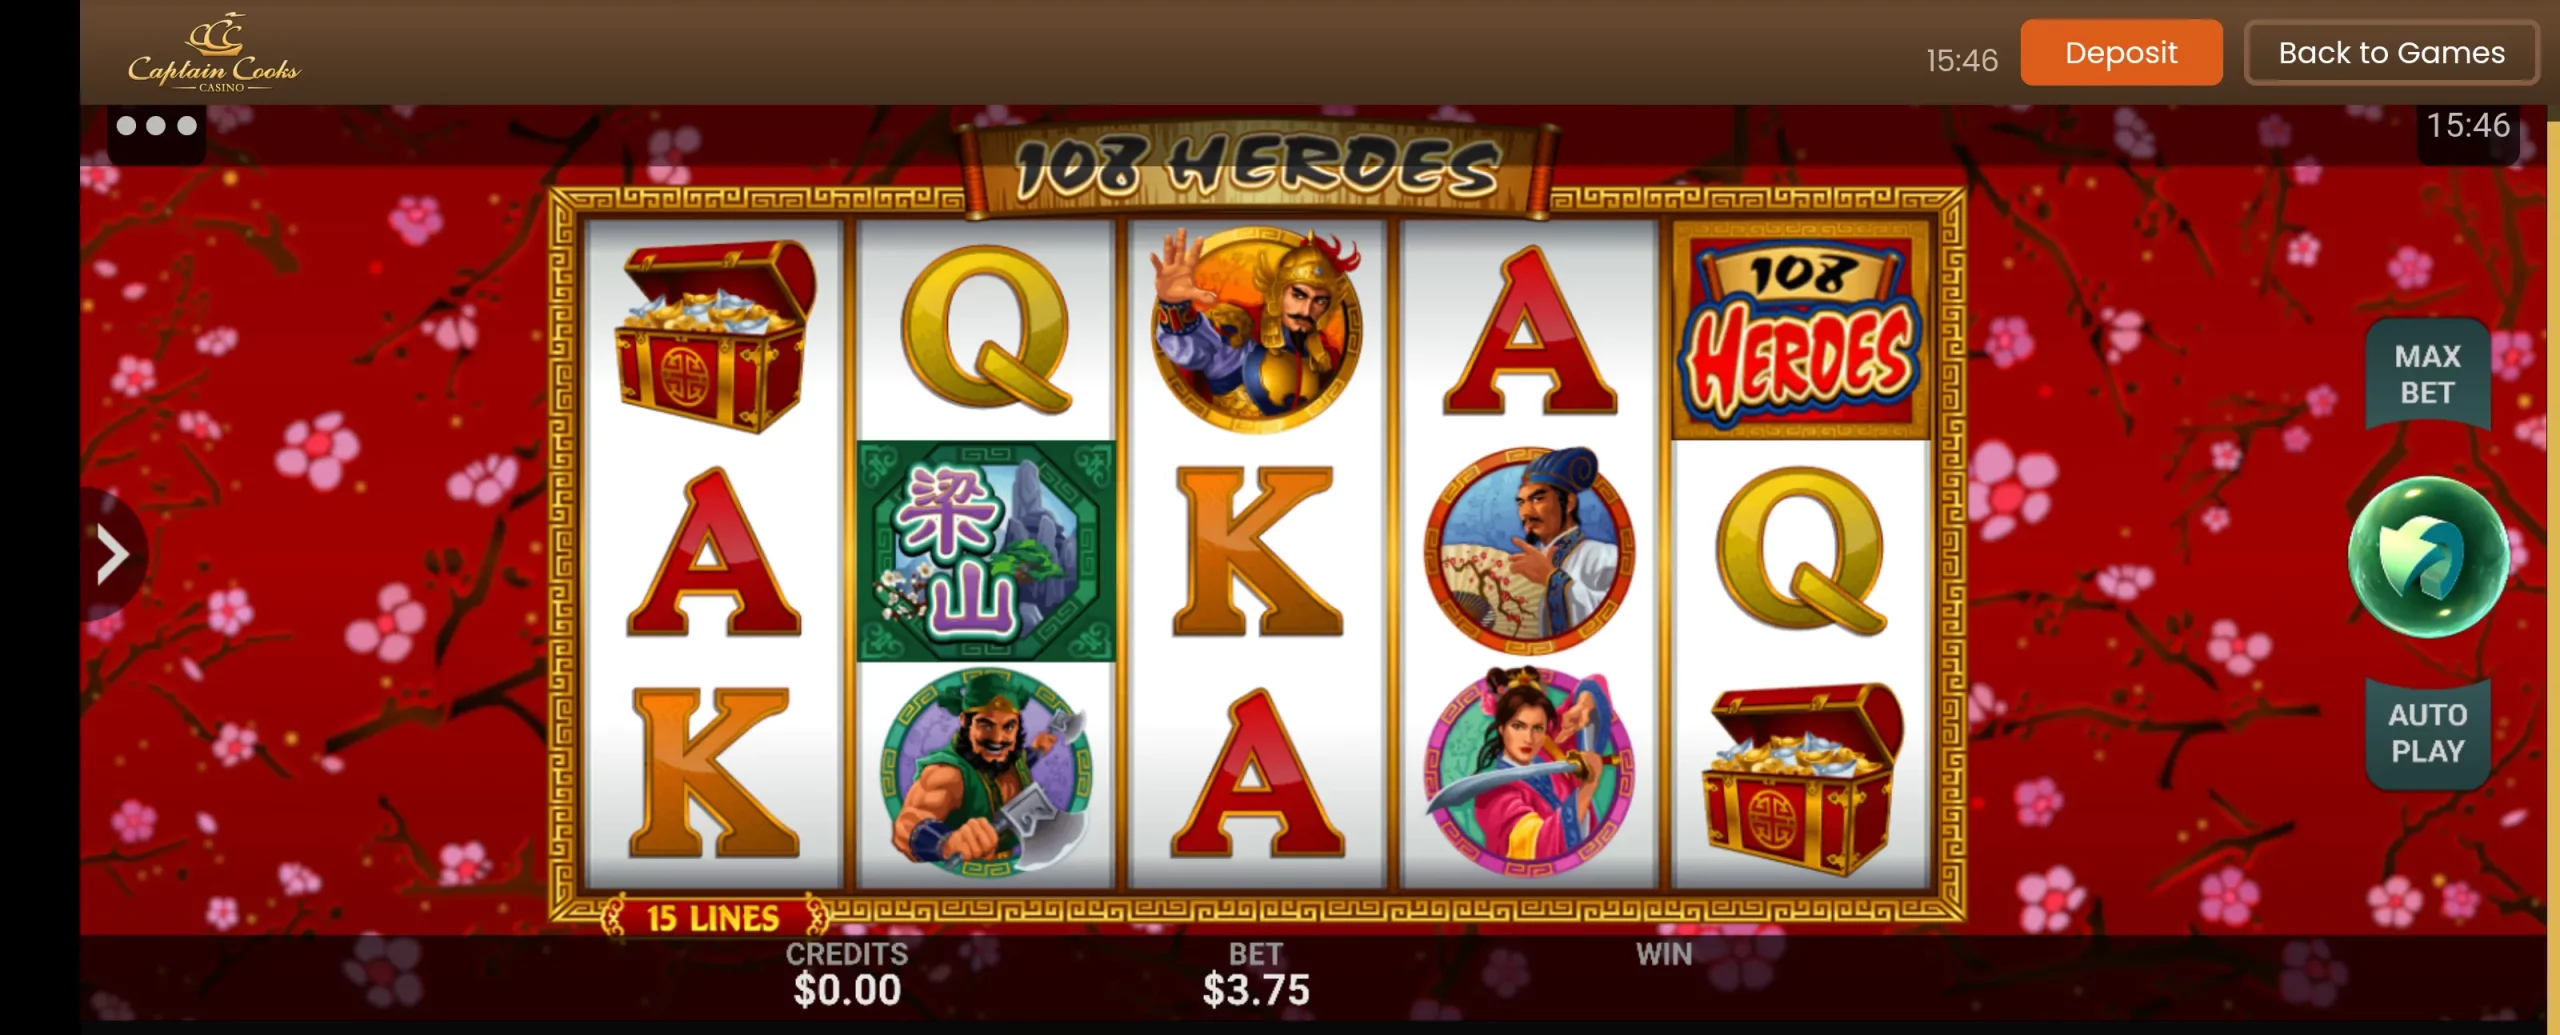 Captain Cooks casino app screenshot 2